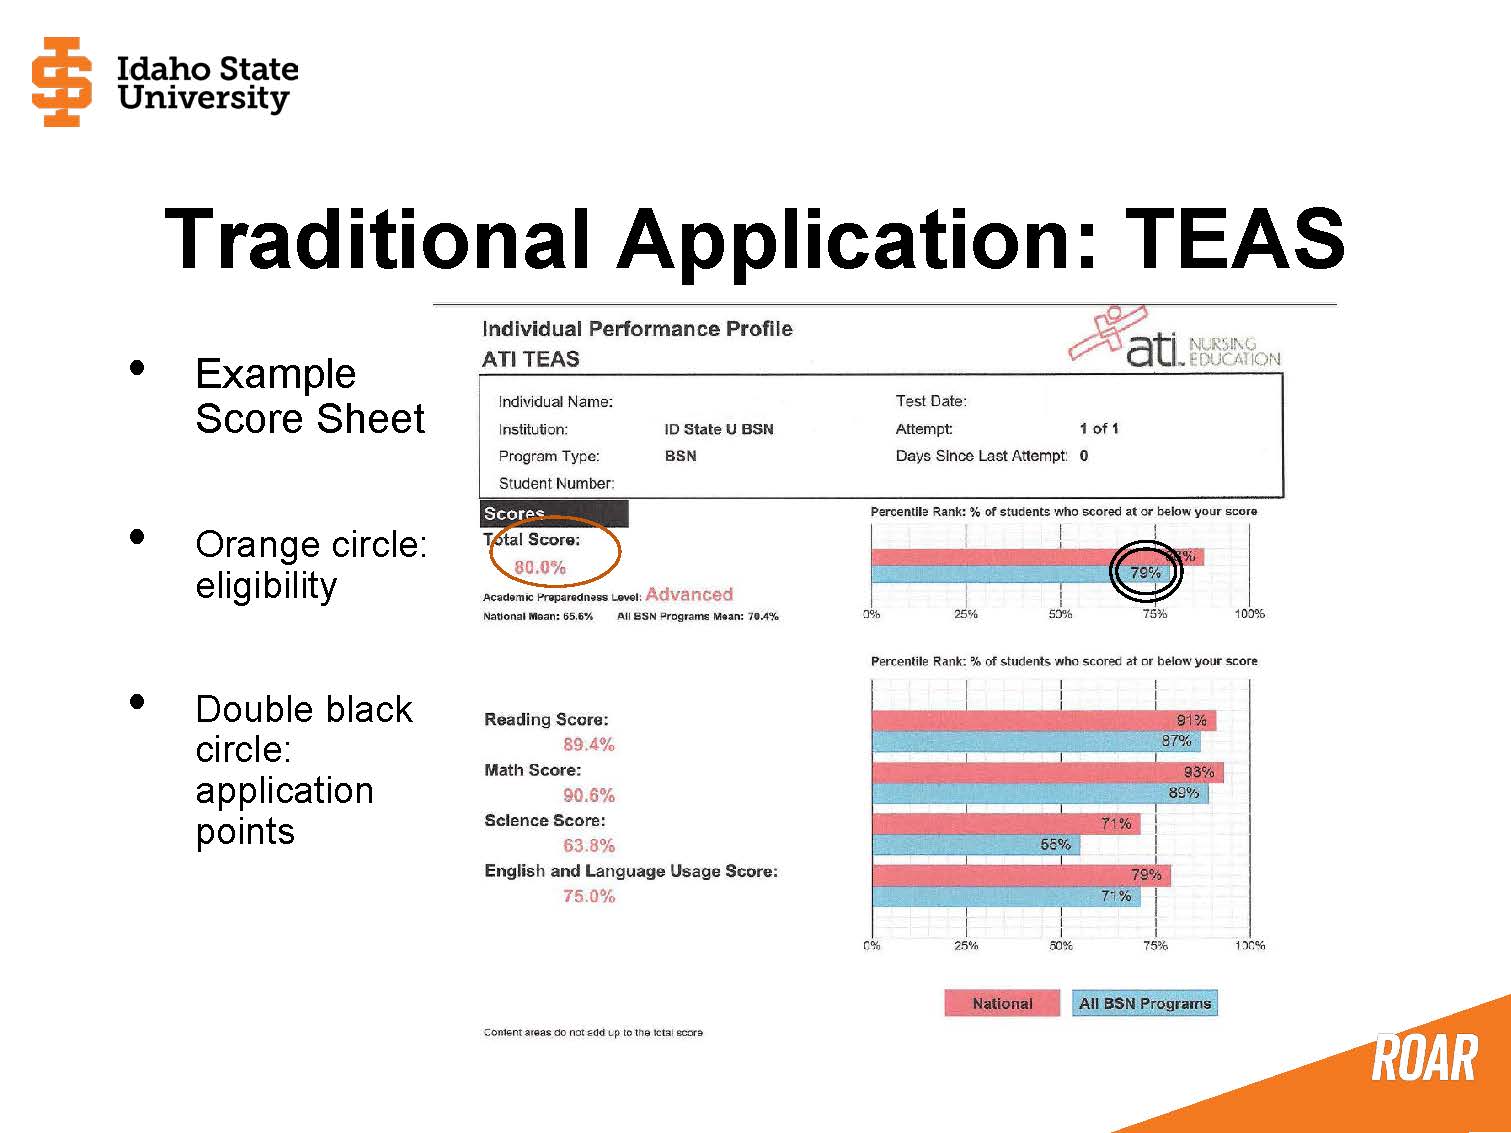 Example Score Sheet  Orange circle: eligibility   Double black circle: application points